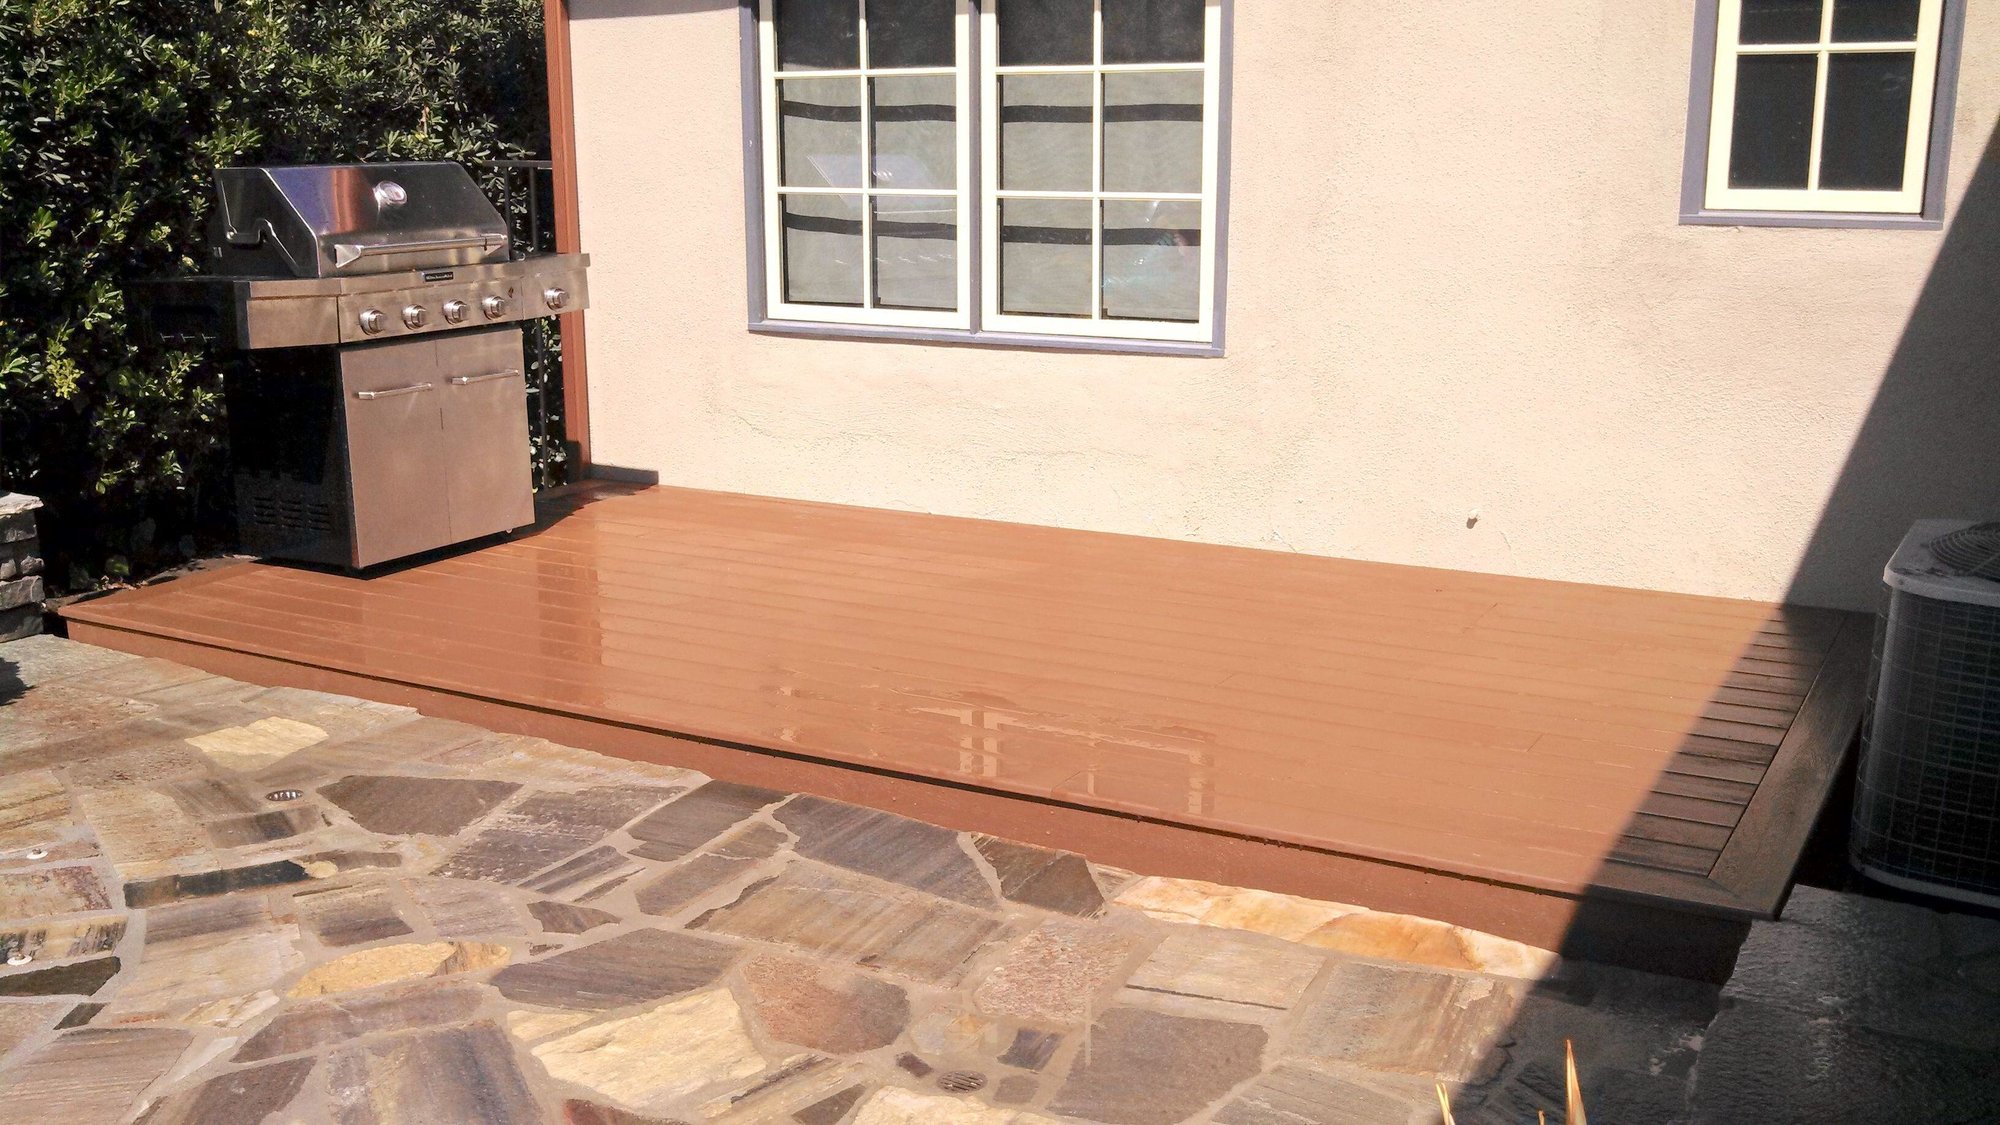 South Bay Deck Builder - Ground Level Patio Deck